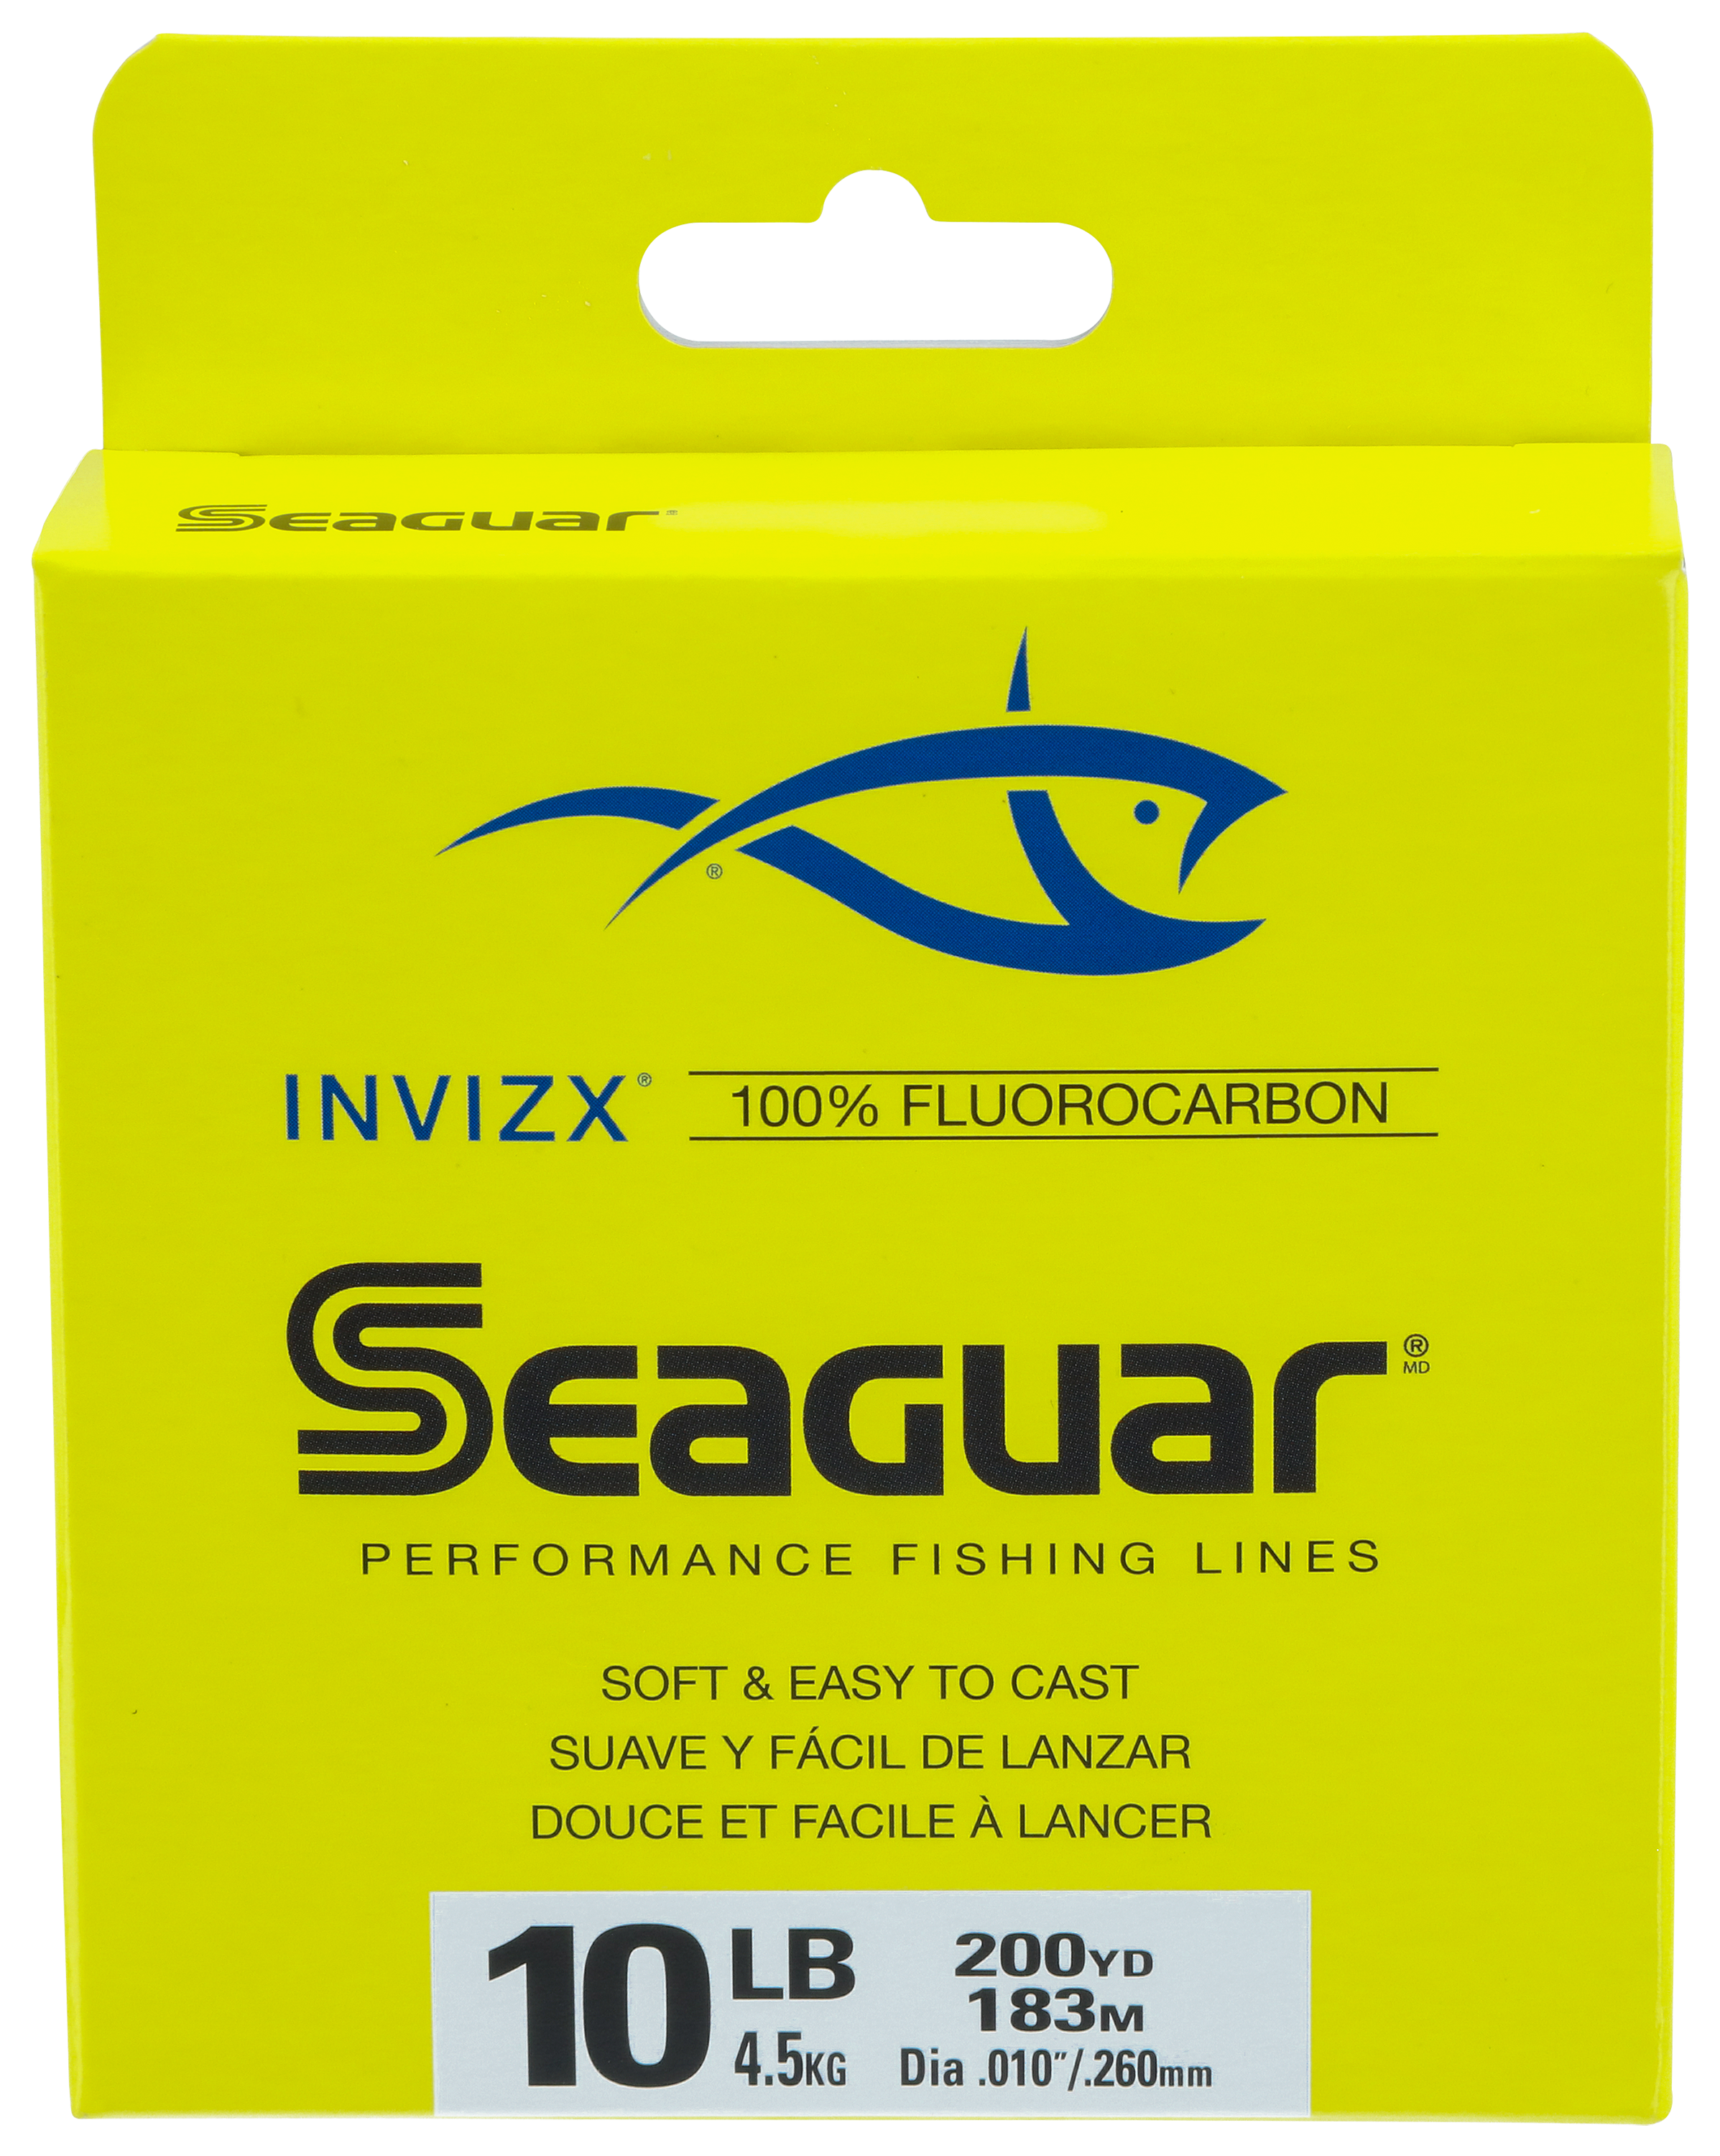 Seaguar 20VZ1000 Invizx 100 Fluoro Fishing Line 1000 yd 20 lb for